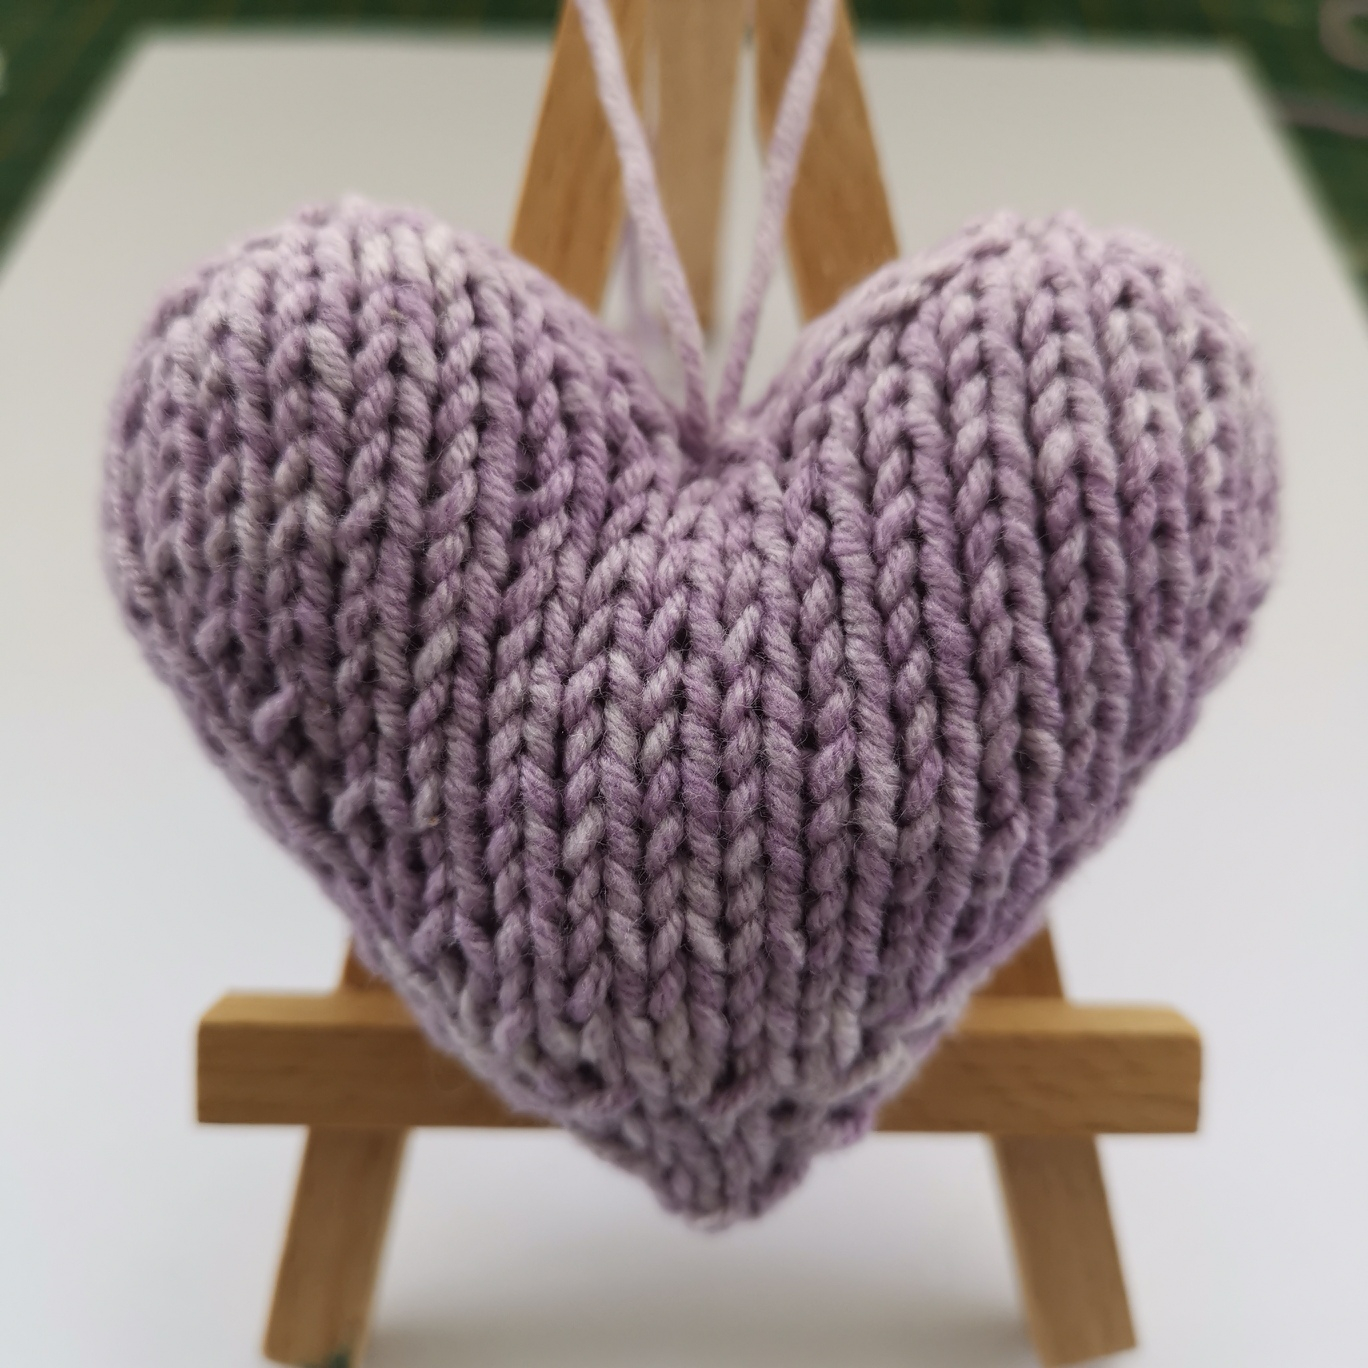 Knitted Heart Pattern My Nearly No Sew Knitted Stuffed Heart Pattern Again